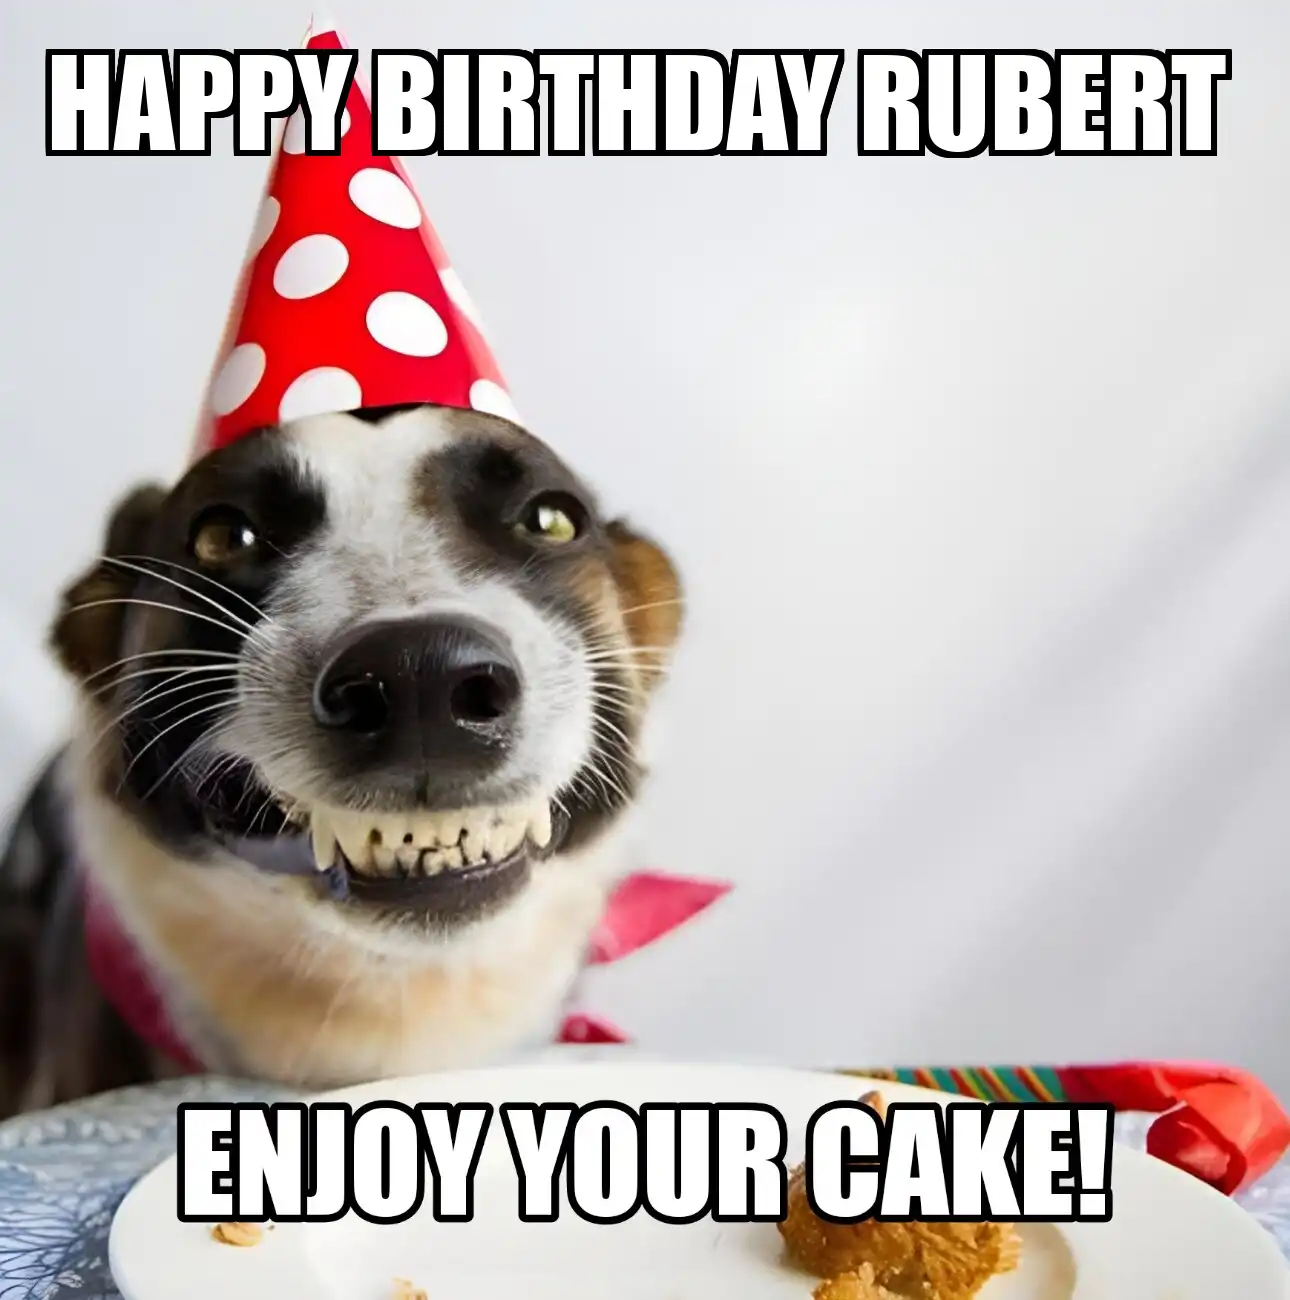 Happy Birthday Rubert Enjoy Your Cake Dog Meme